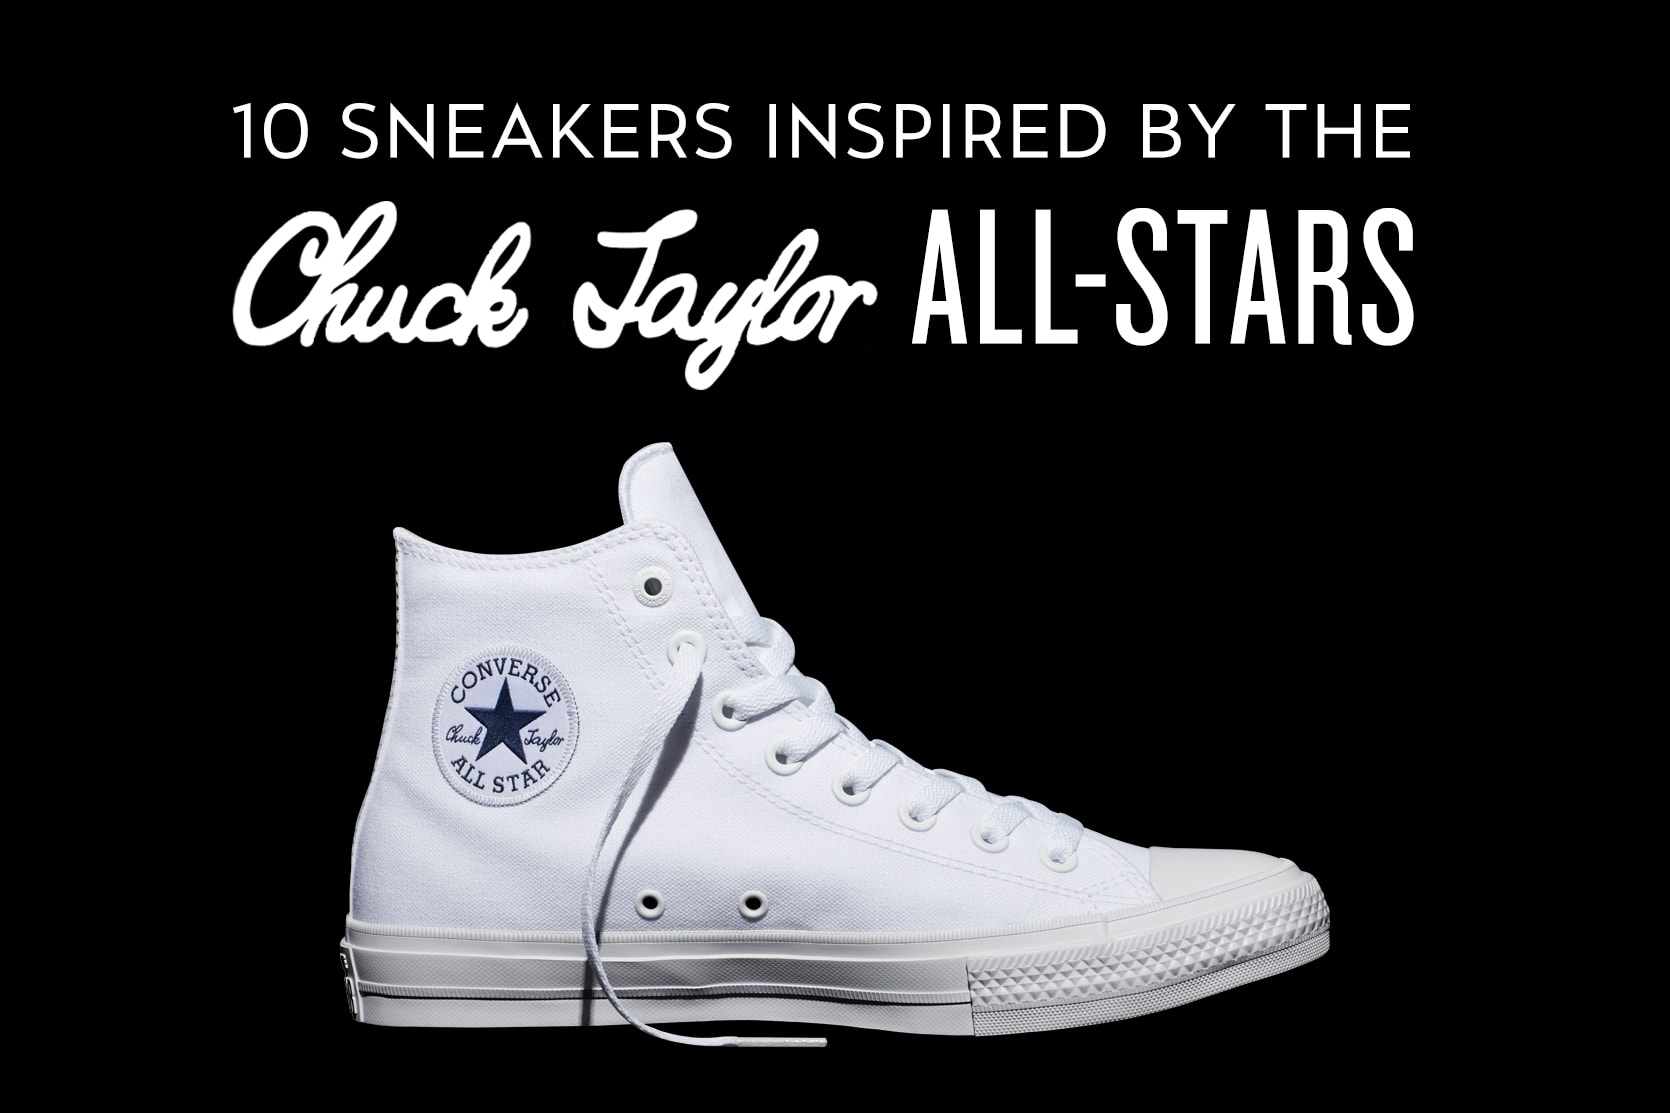 Chanel Sneakers Black /White master copy w/ box 